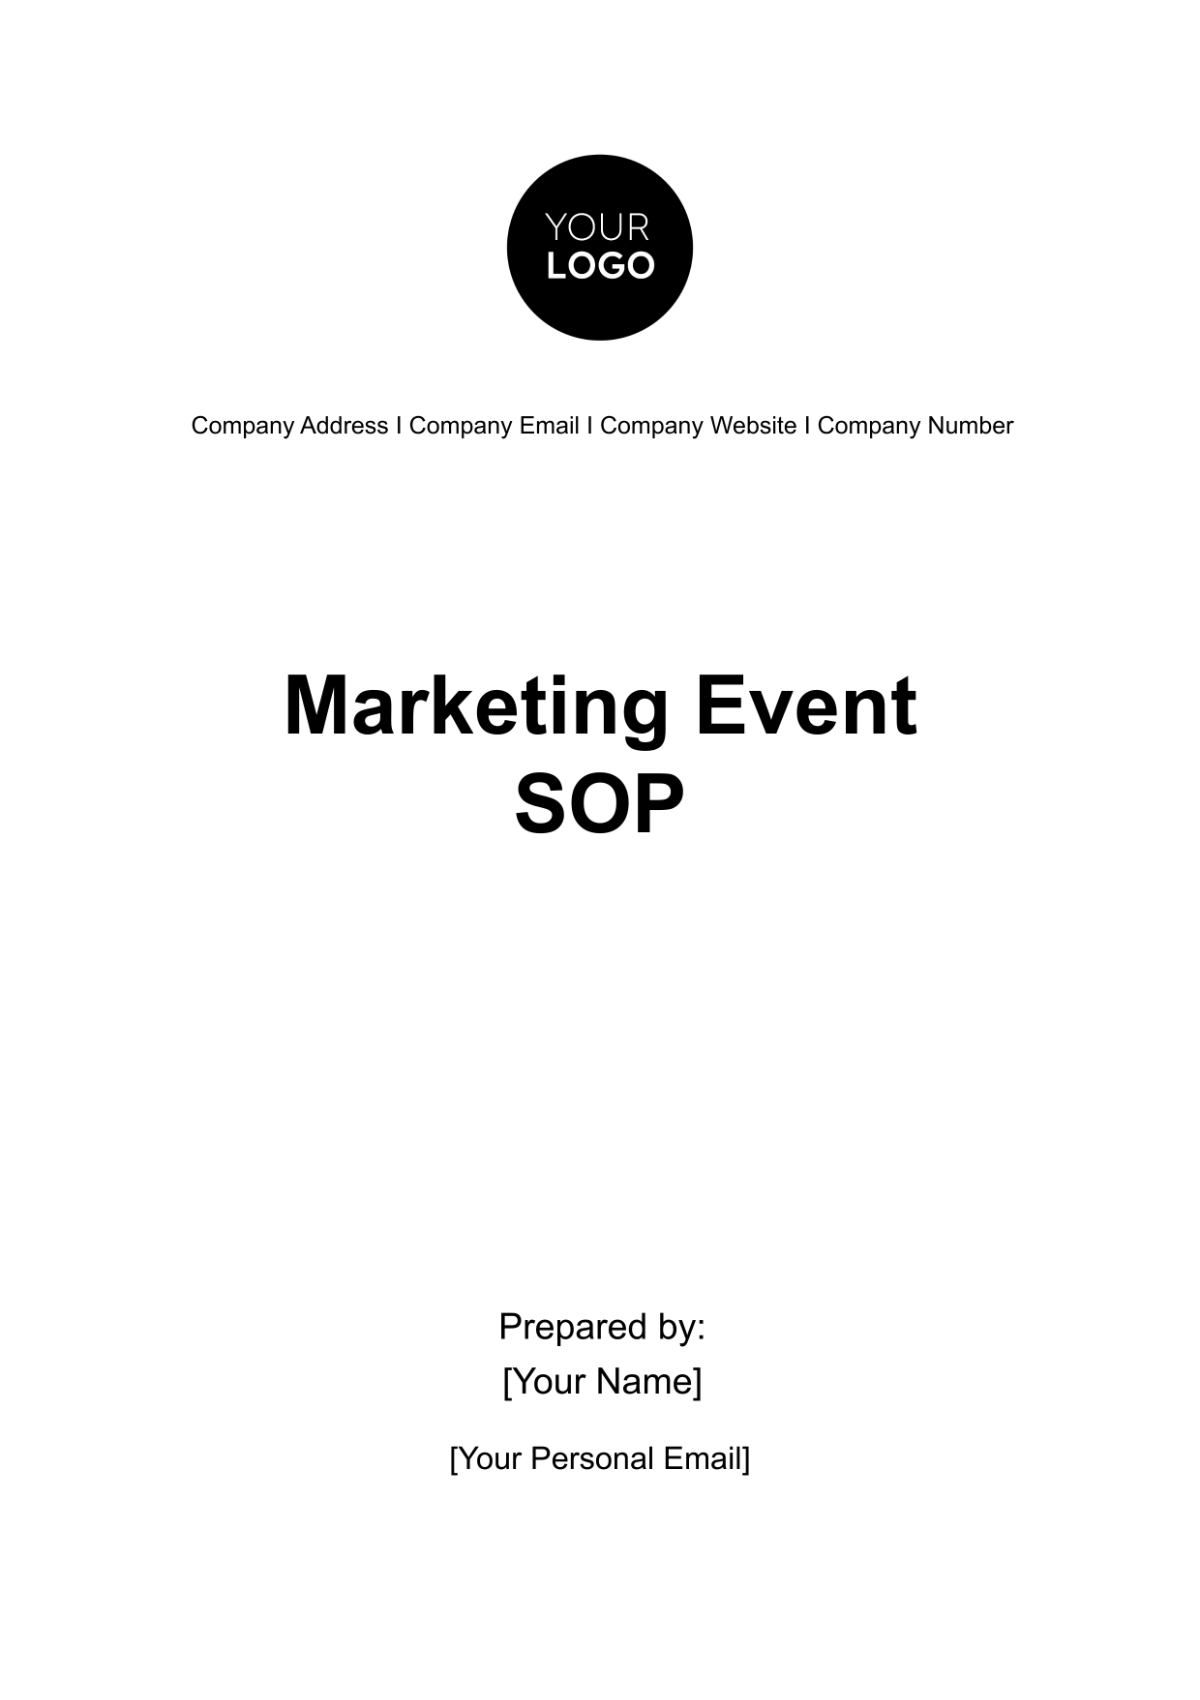 Free Marketing Event SOP Template